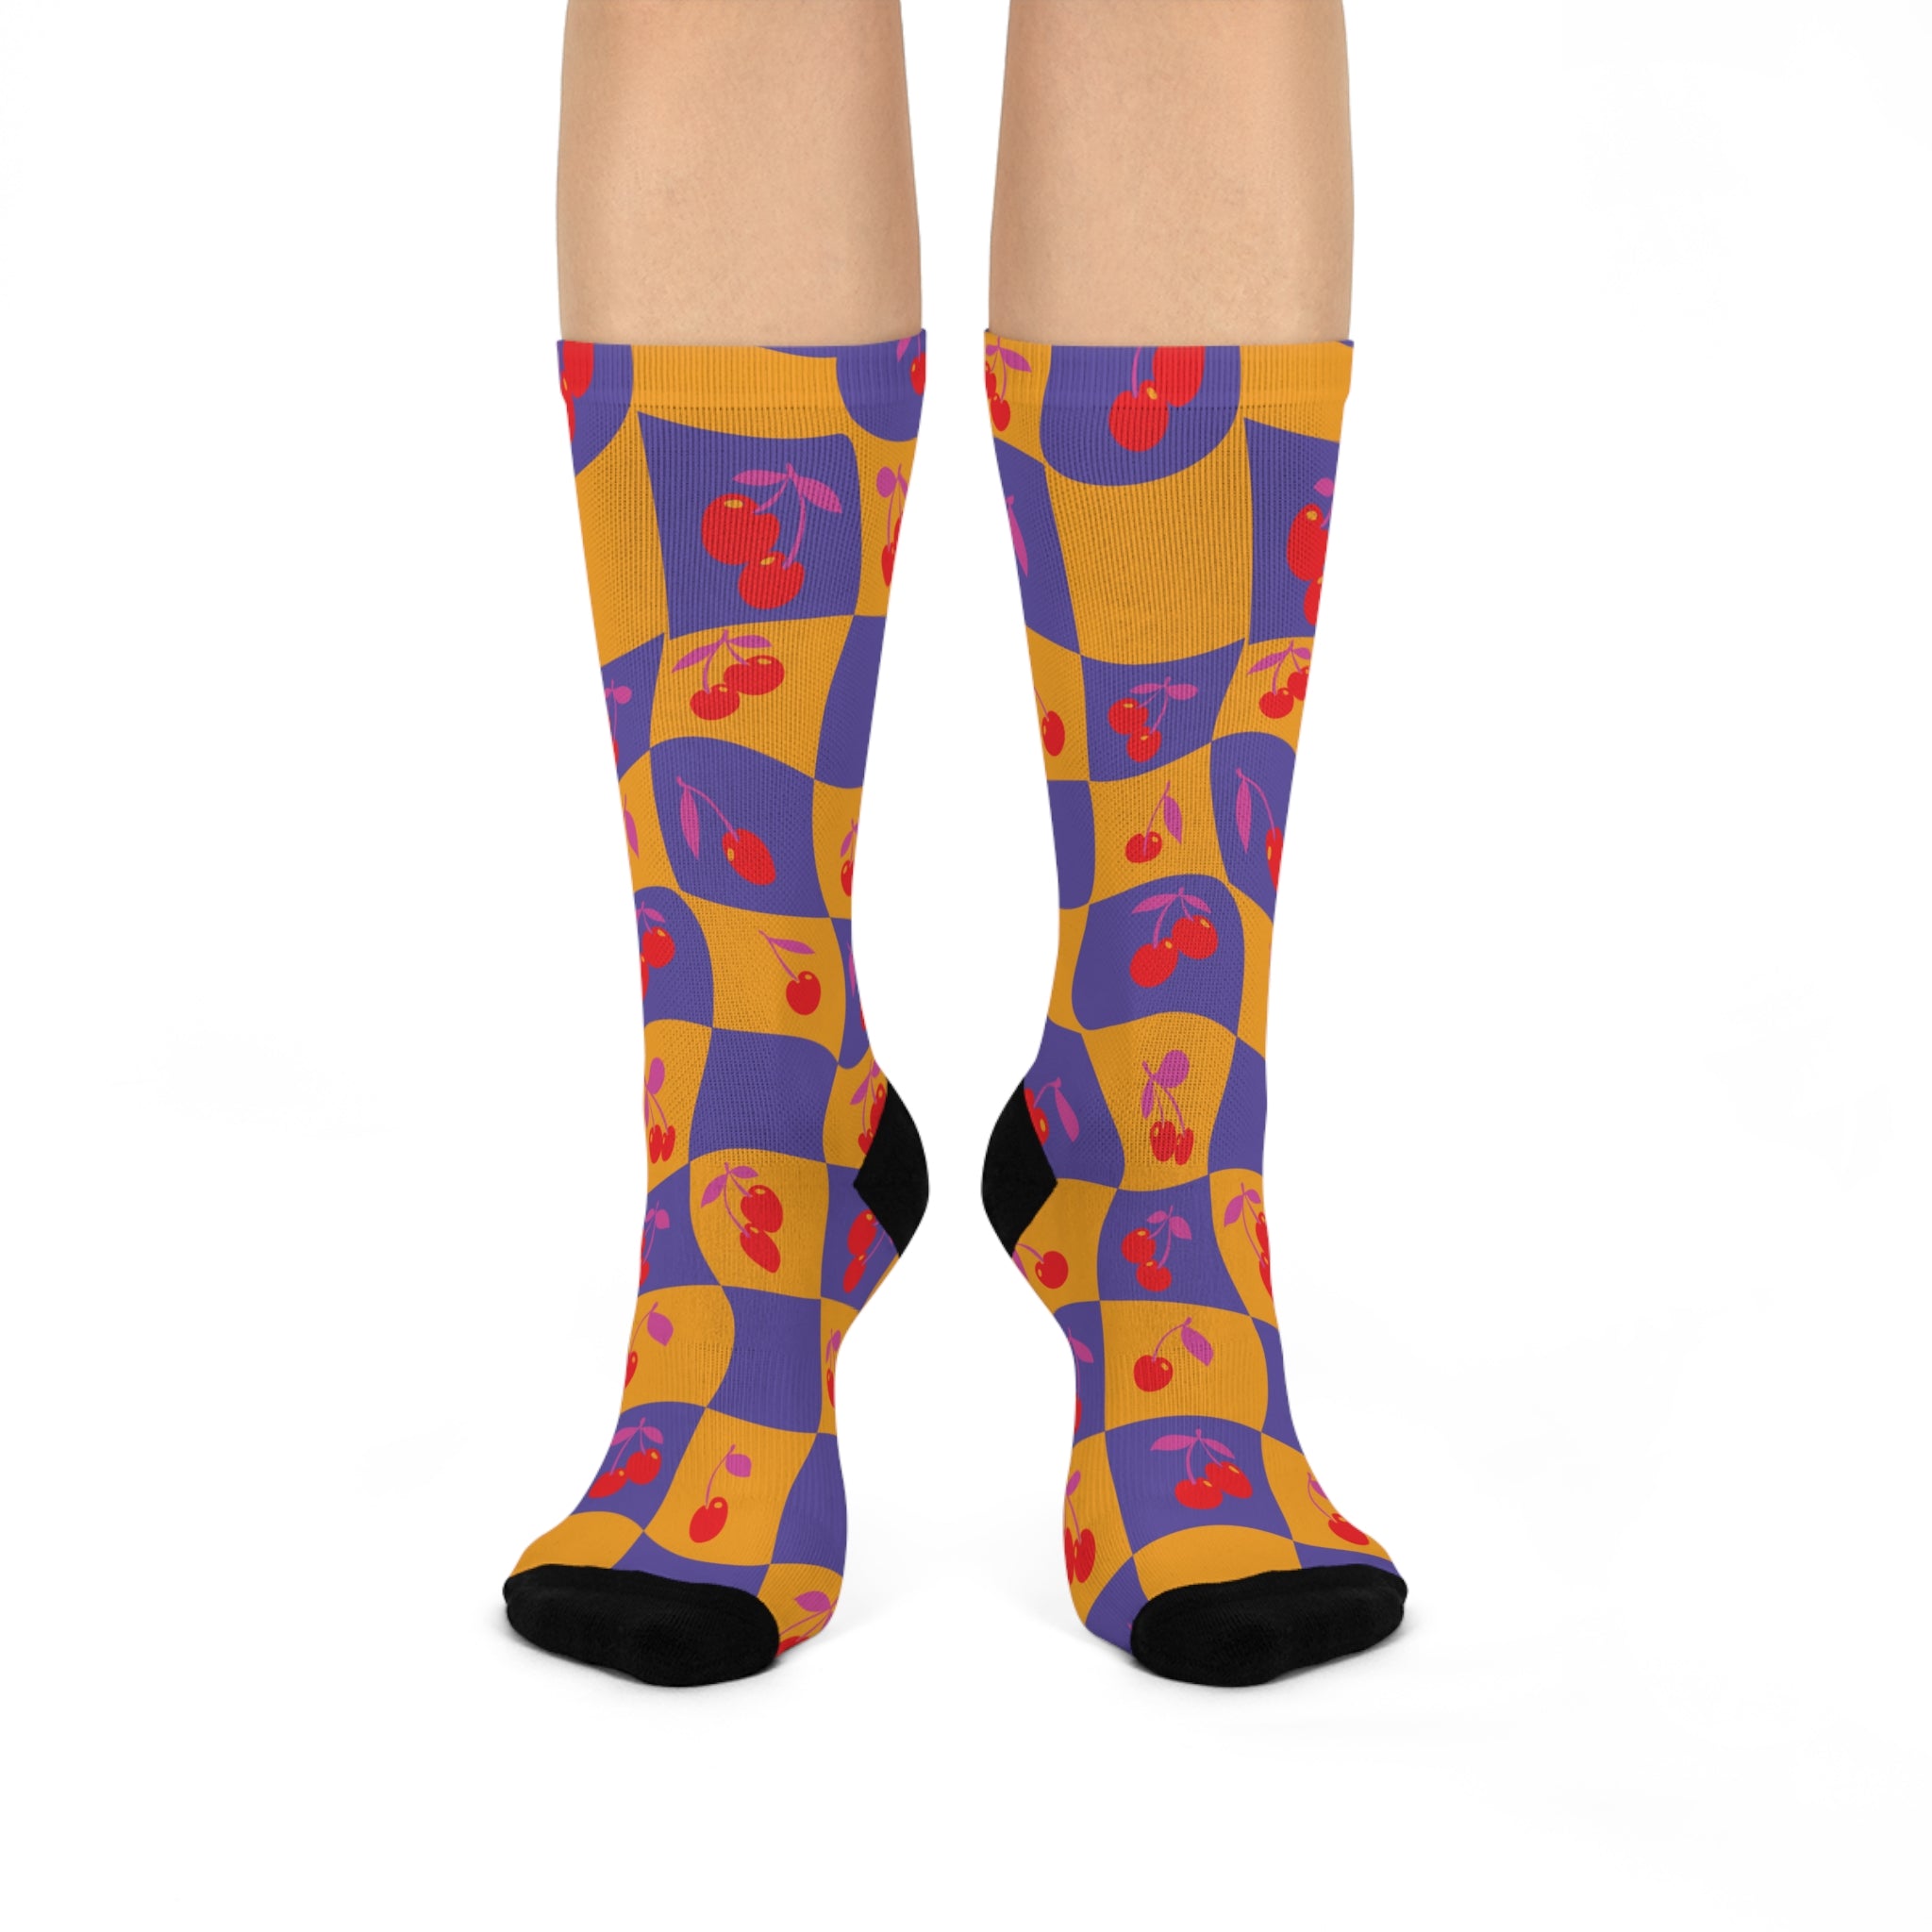 Yellow and Purple checkerboard socks with cherry print. Retro-inspired design.